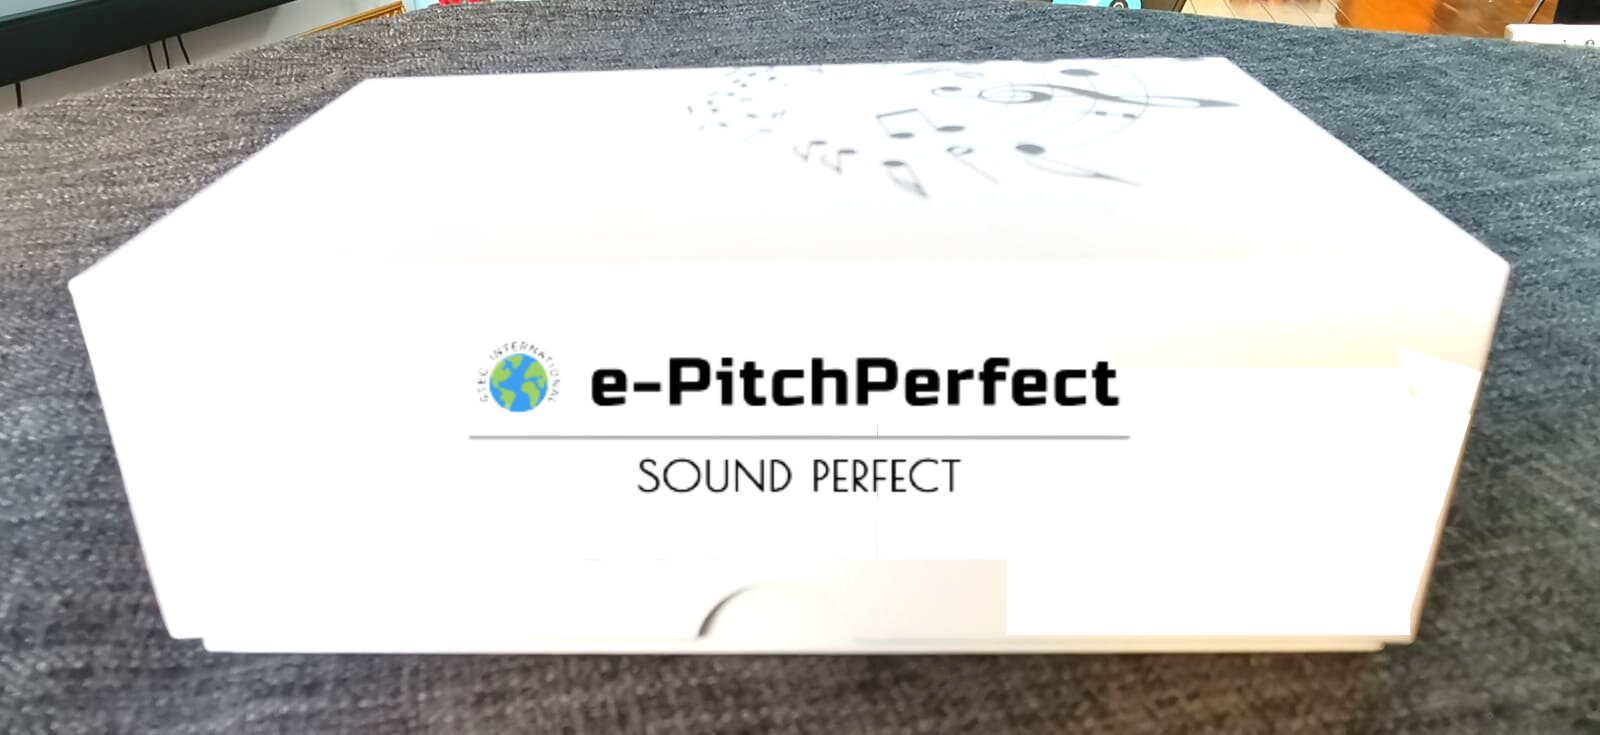 GTEC INTERNATIONAL 的 e-PitchPerfect (e-PP) BT 耳塞。最好的质量和清晰的声音、质量结构和最先进的蓝牙和声音技术在美国设计和制造